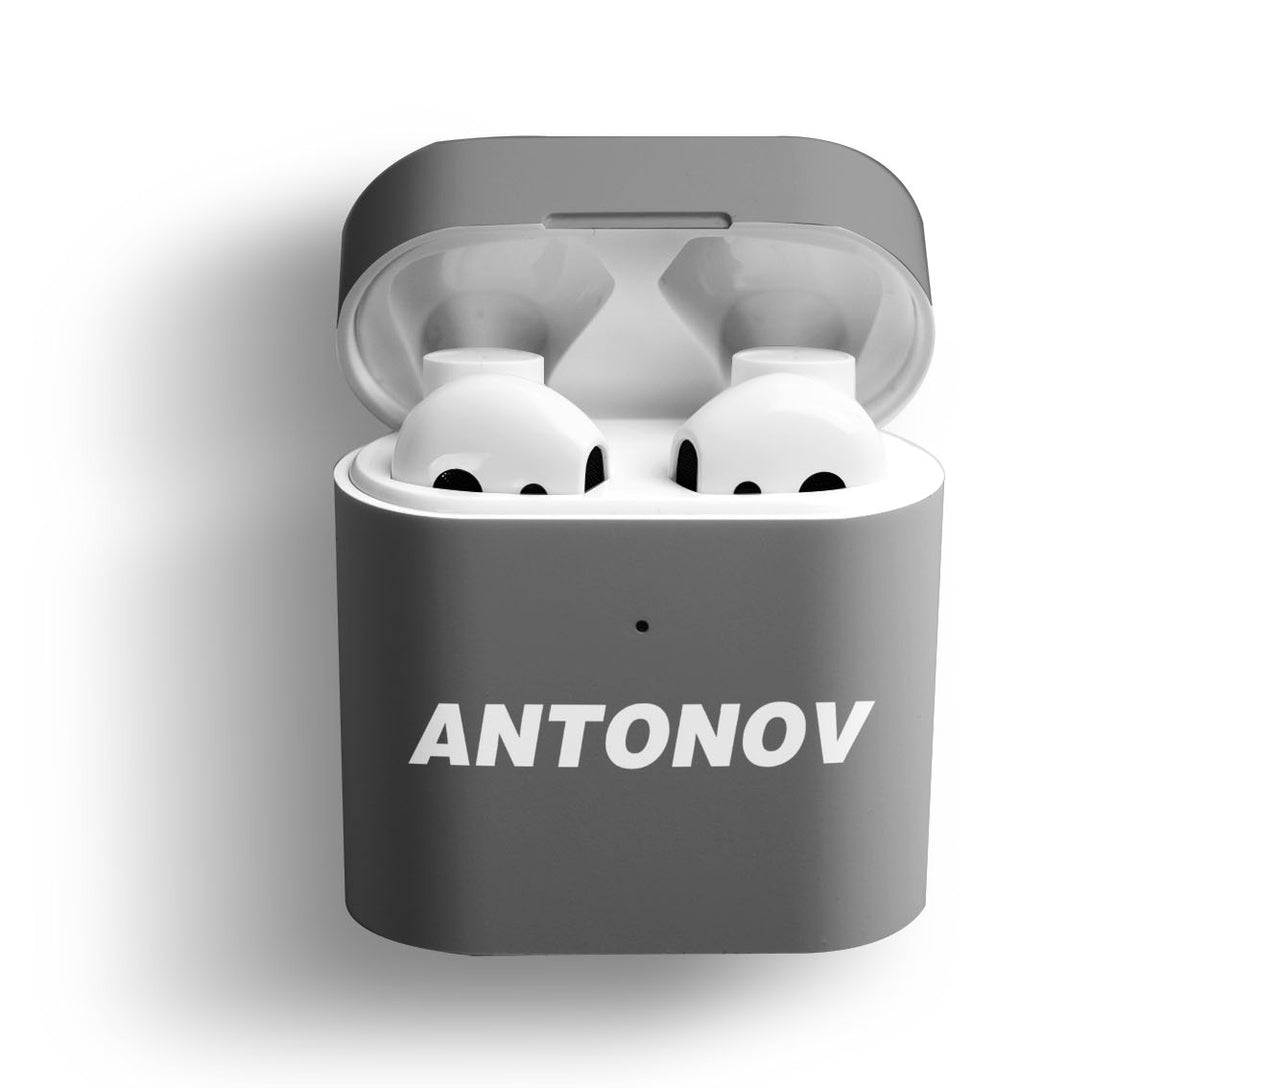 Antonov & Text Designed AirPods Cases